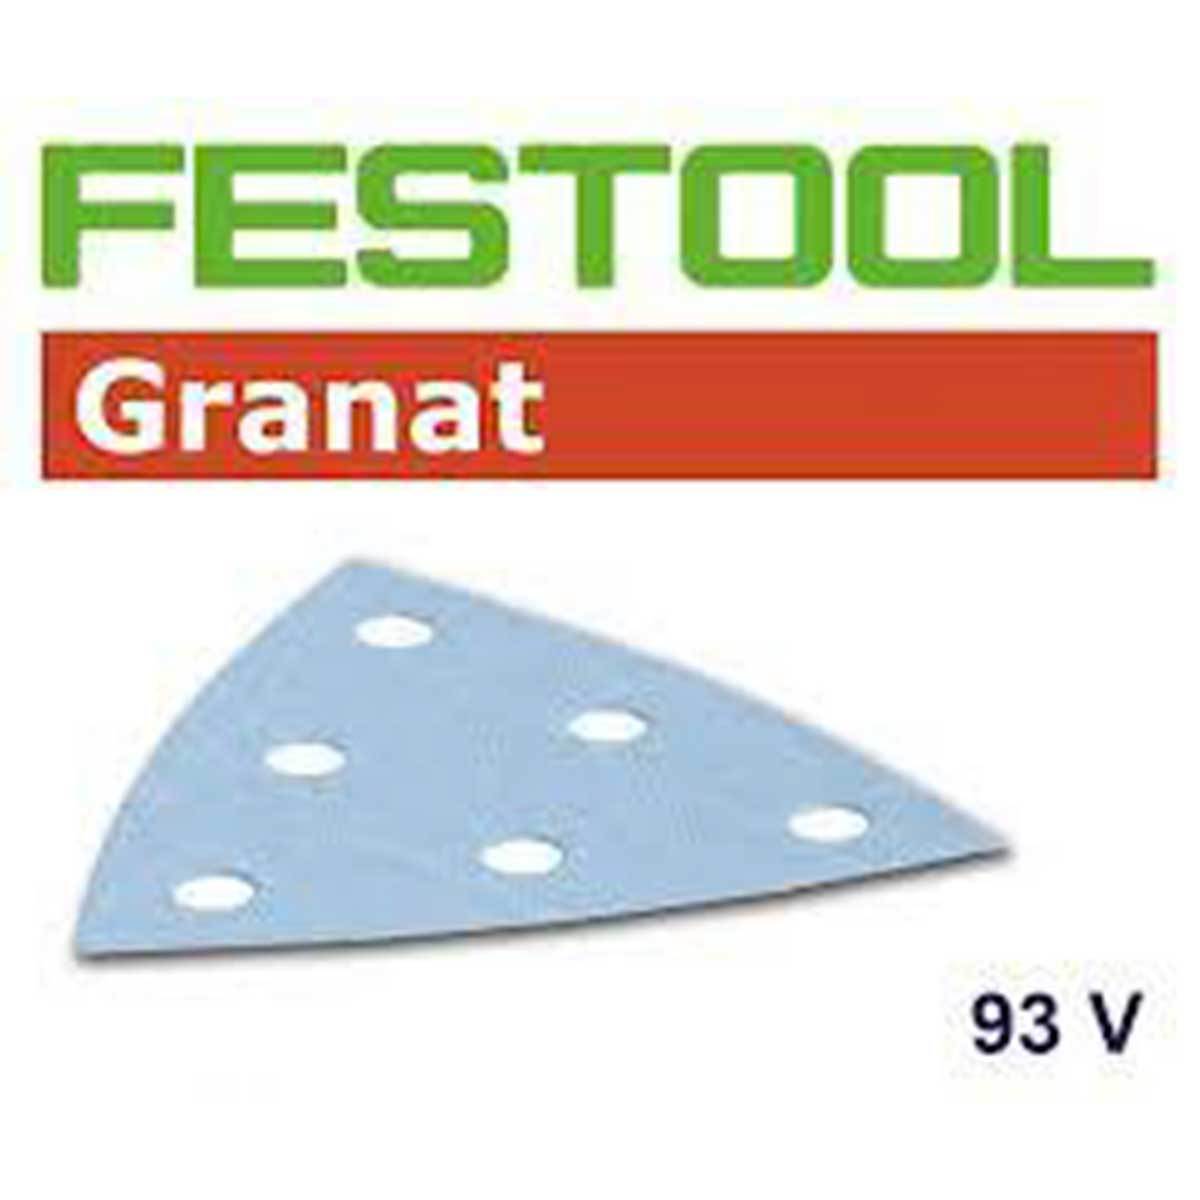 Festool 93mm (3.6") delta Granat StickFix abrasive disc for RO 90 Rotex multi-mode detail sander.